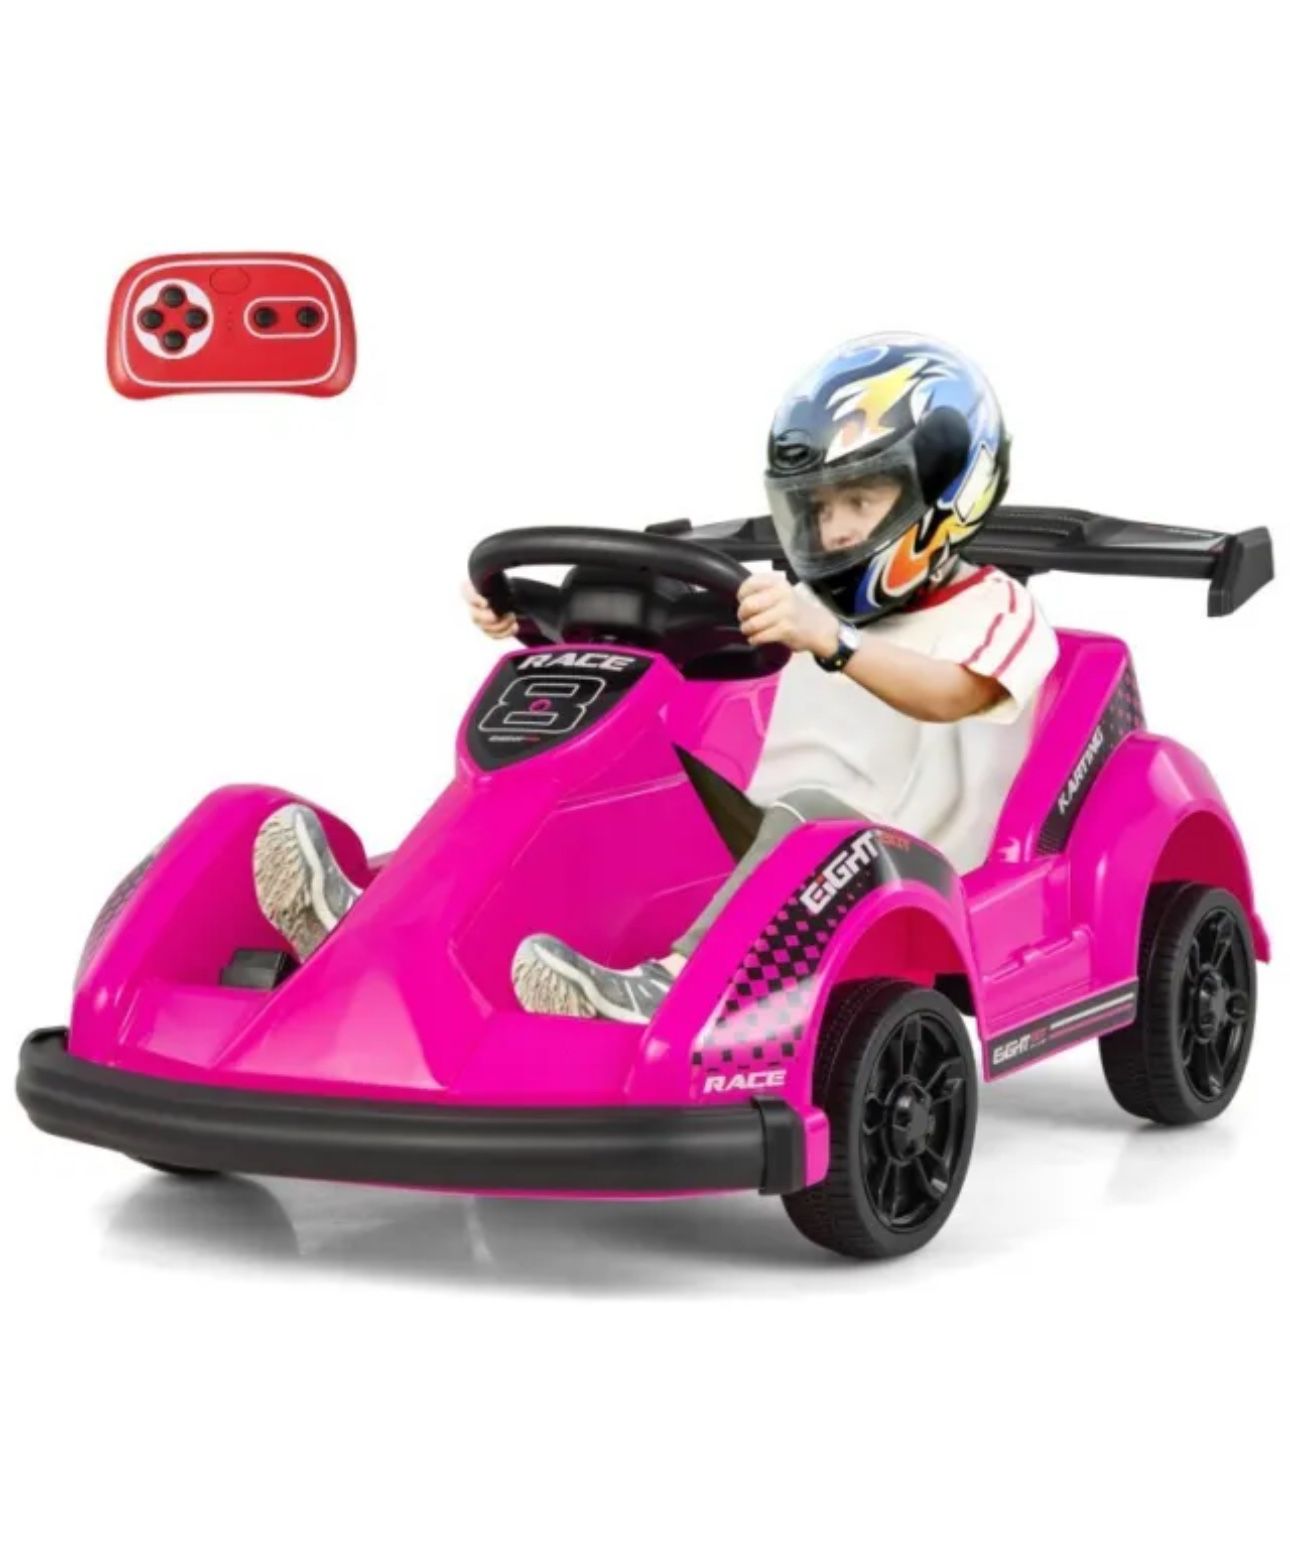 Go Kart Kids 6V Battery Powered Ride On Toy w/ Remote Control & Safety Belt Pink